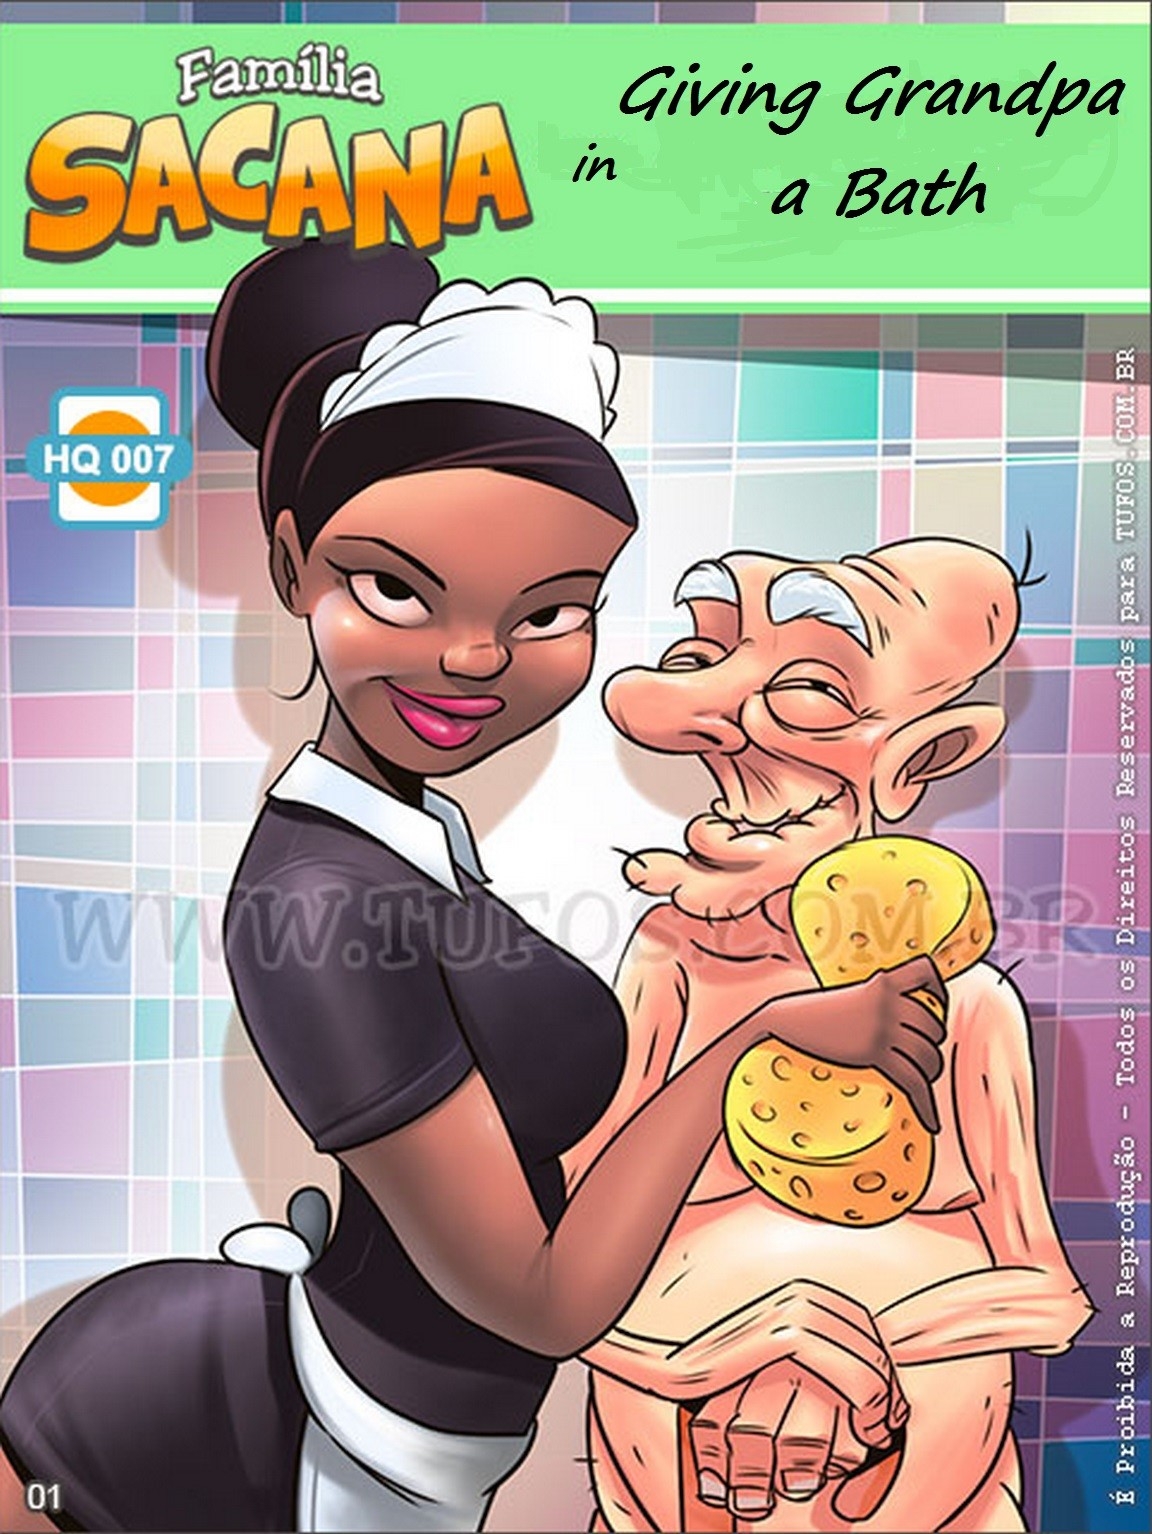 Family Sacana #7 (English Version) - Giving Grandpa a Bath